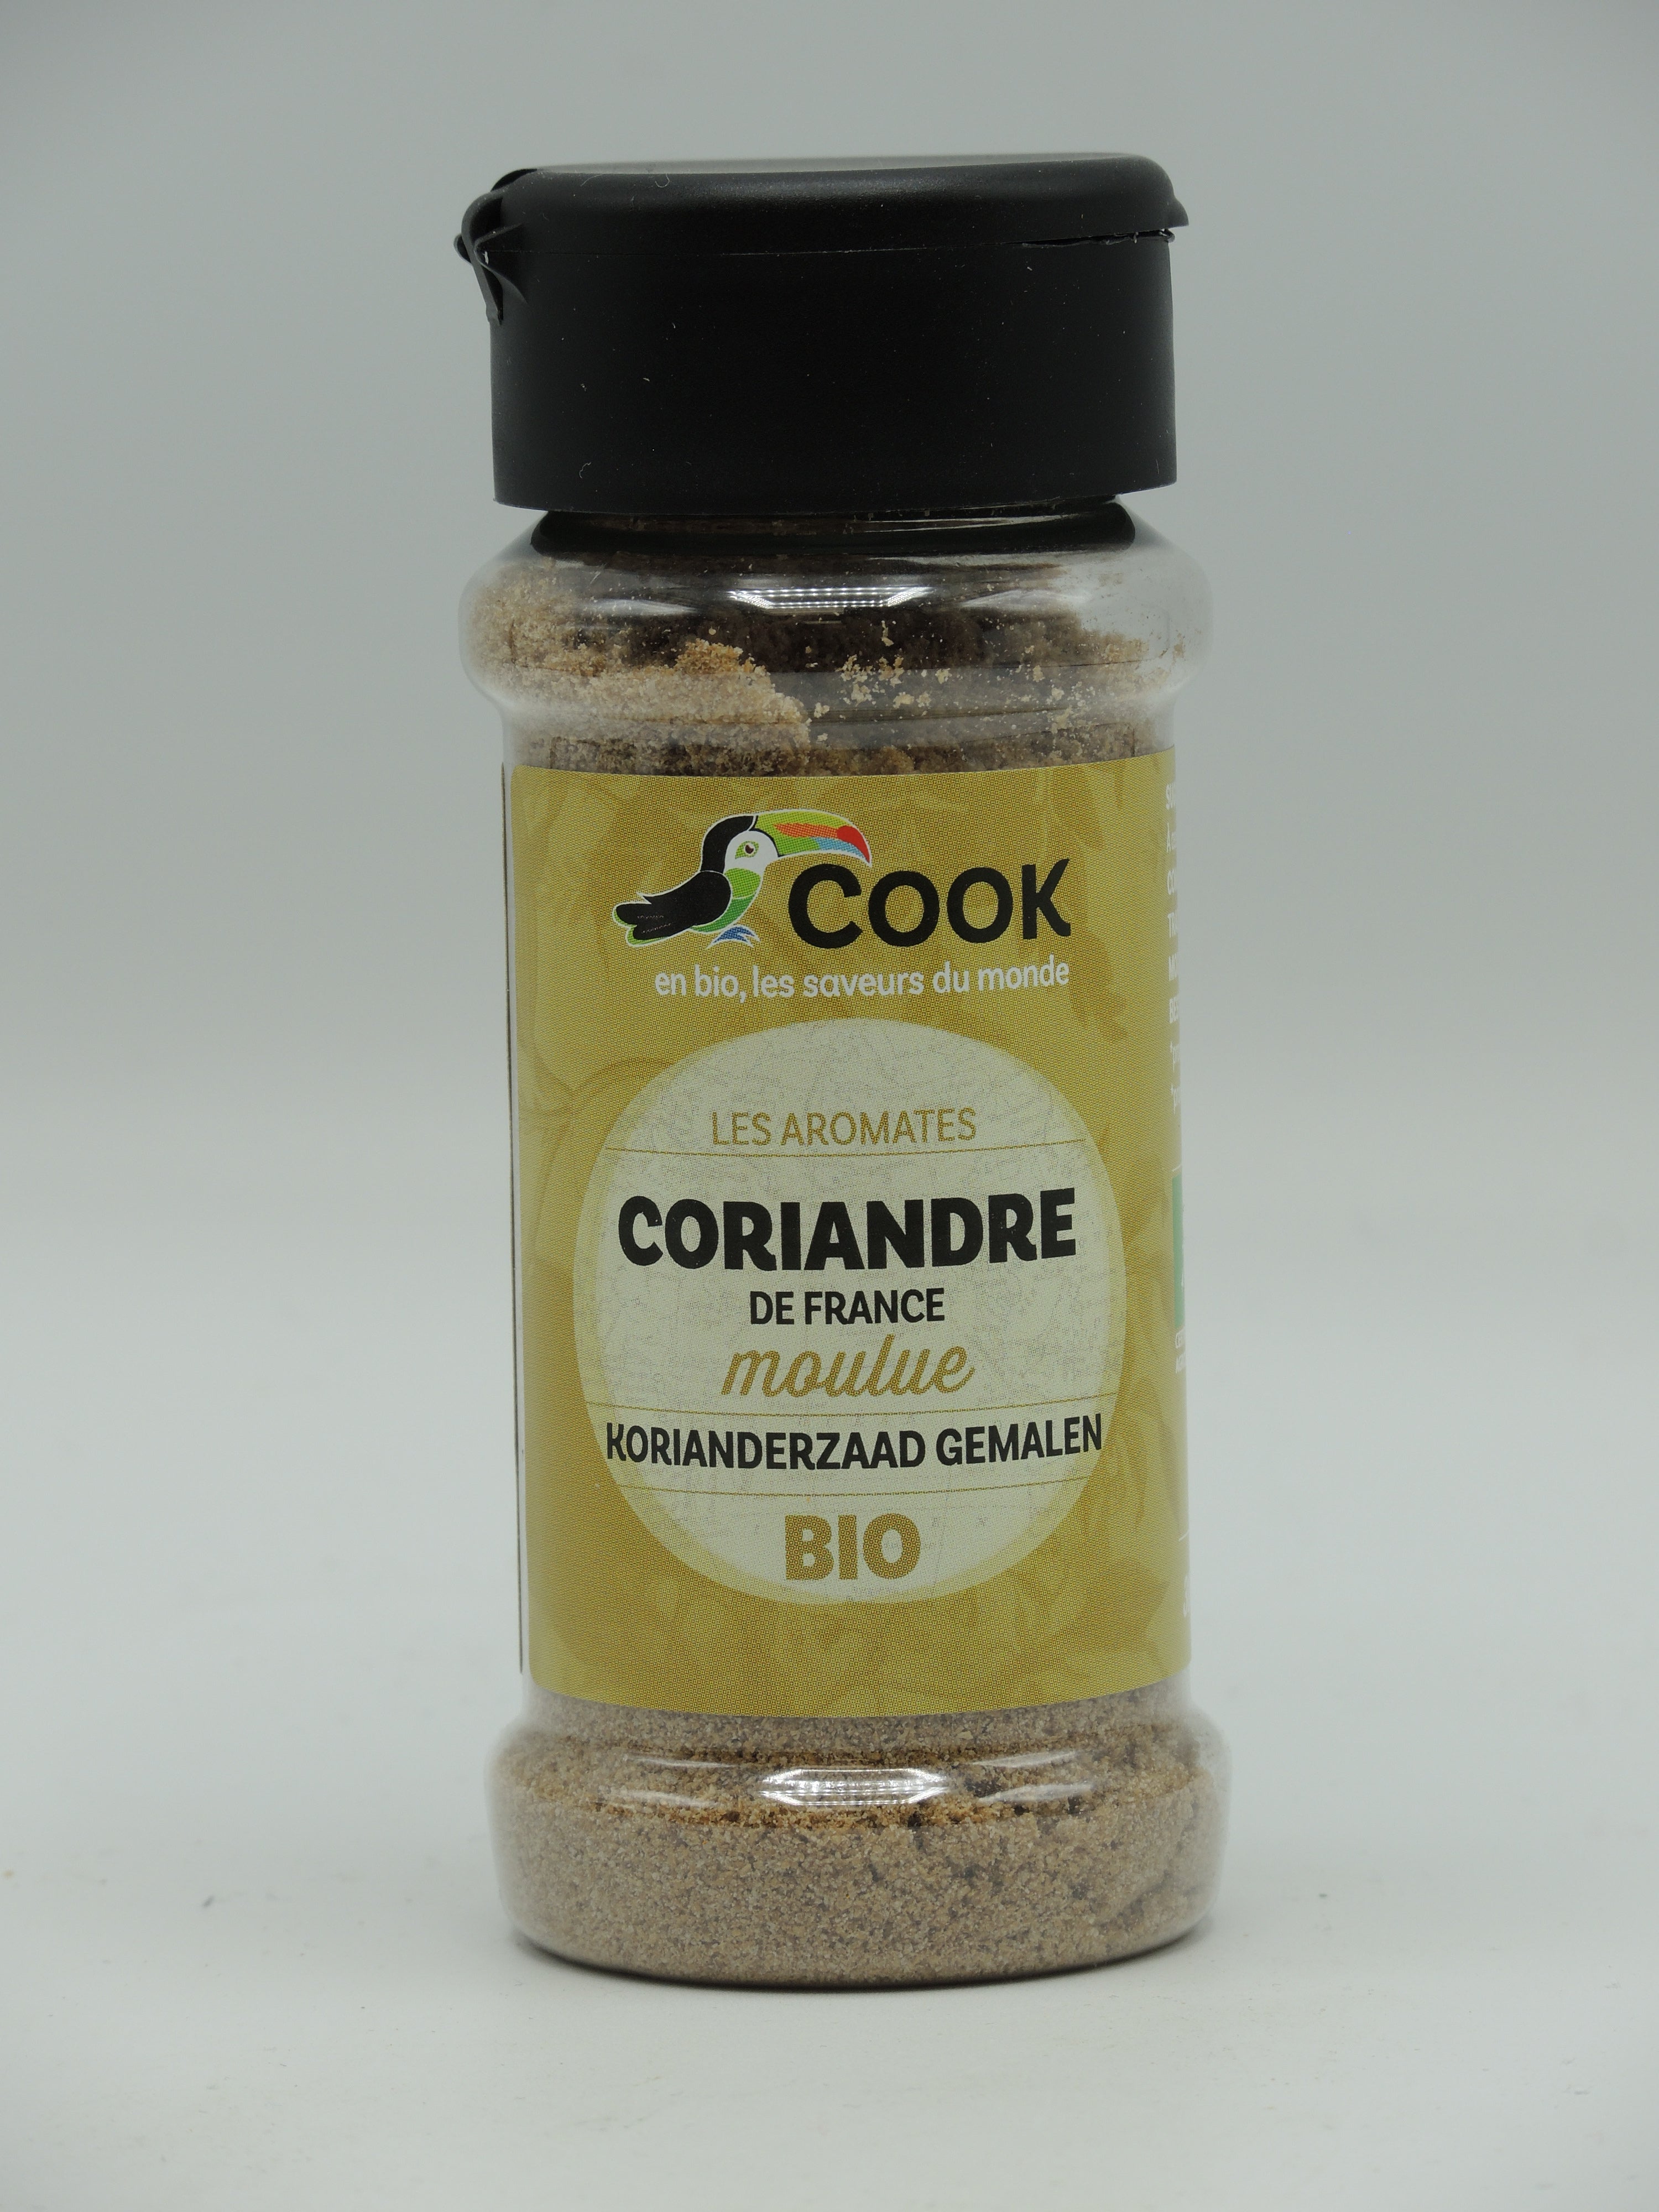 Vente d'aromate de graines de coriandre bio Cook